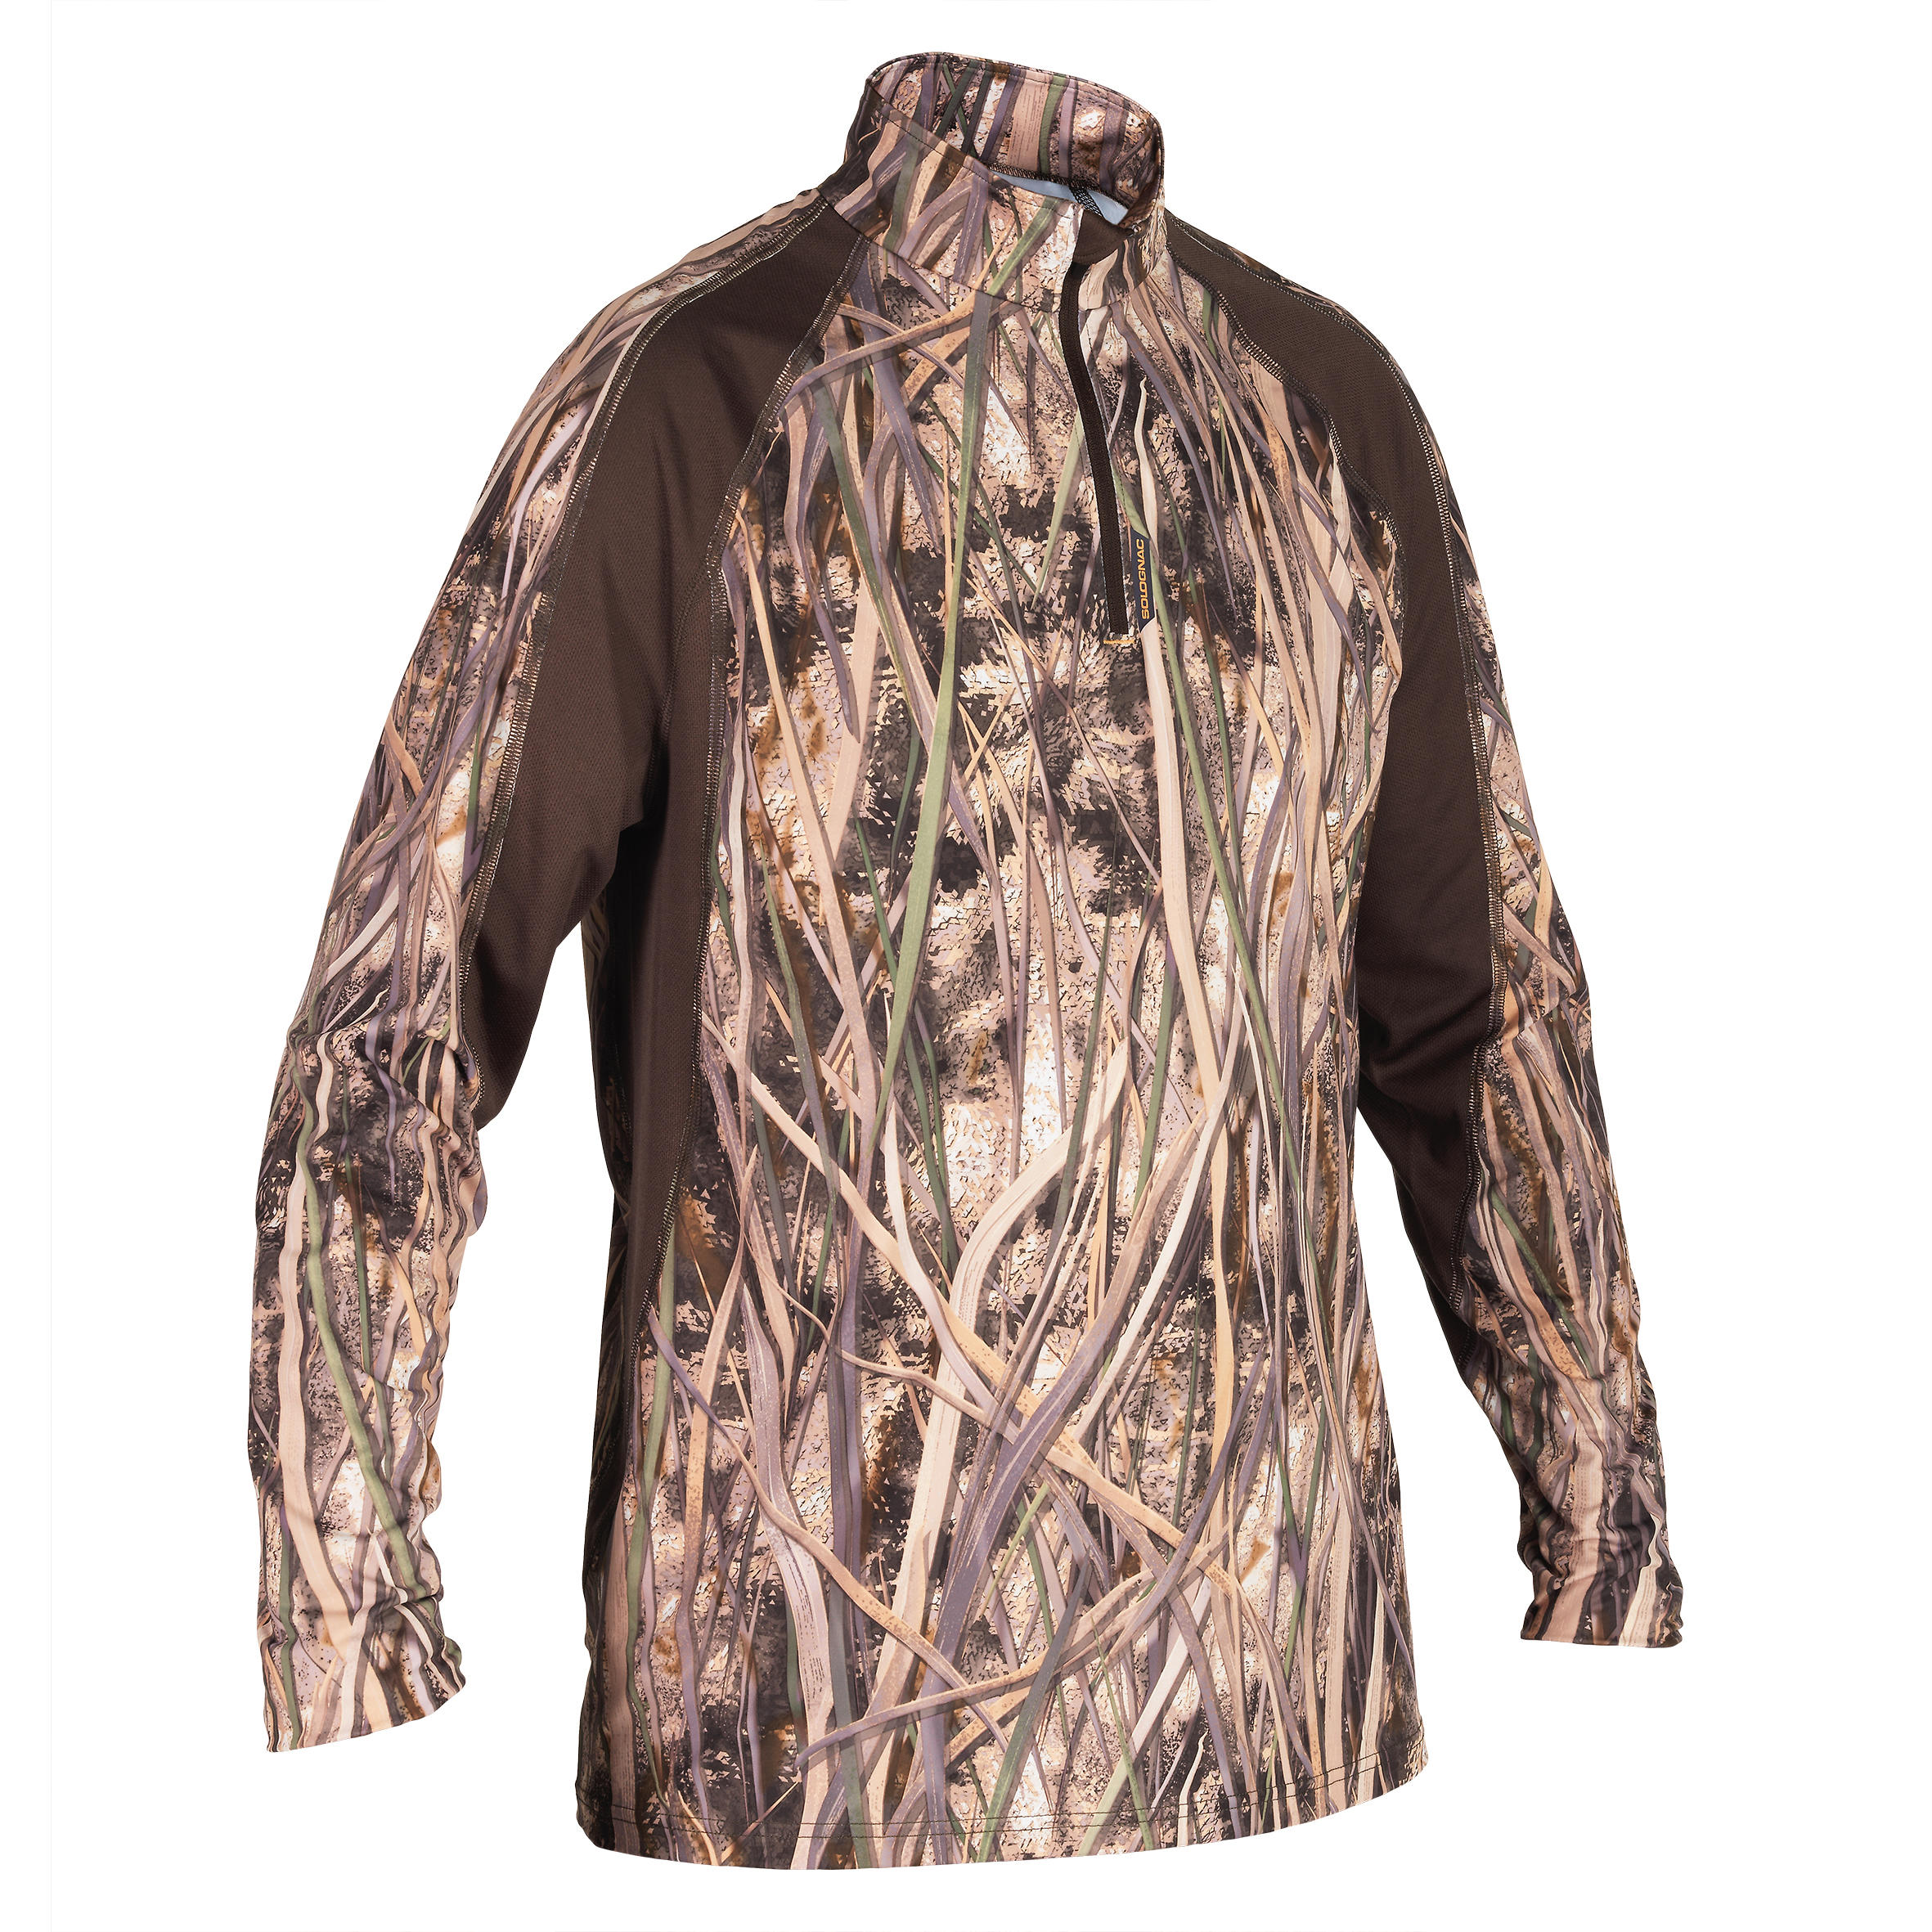 500 Breathable Long Sleeve T-shirt - Wetlands Camo 1/8